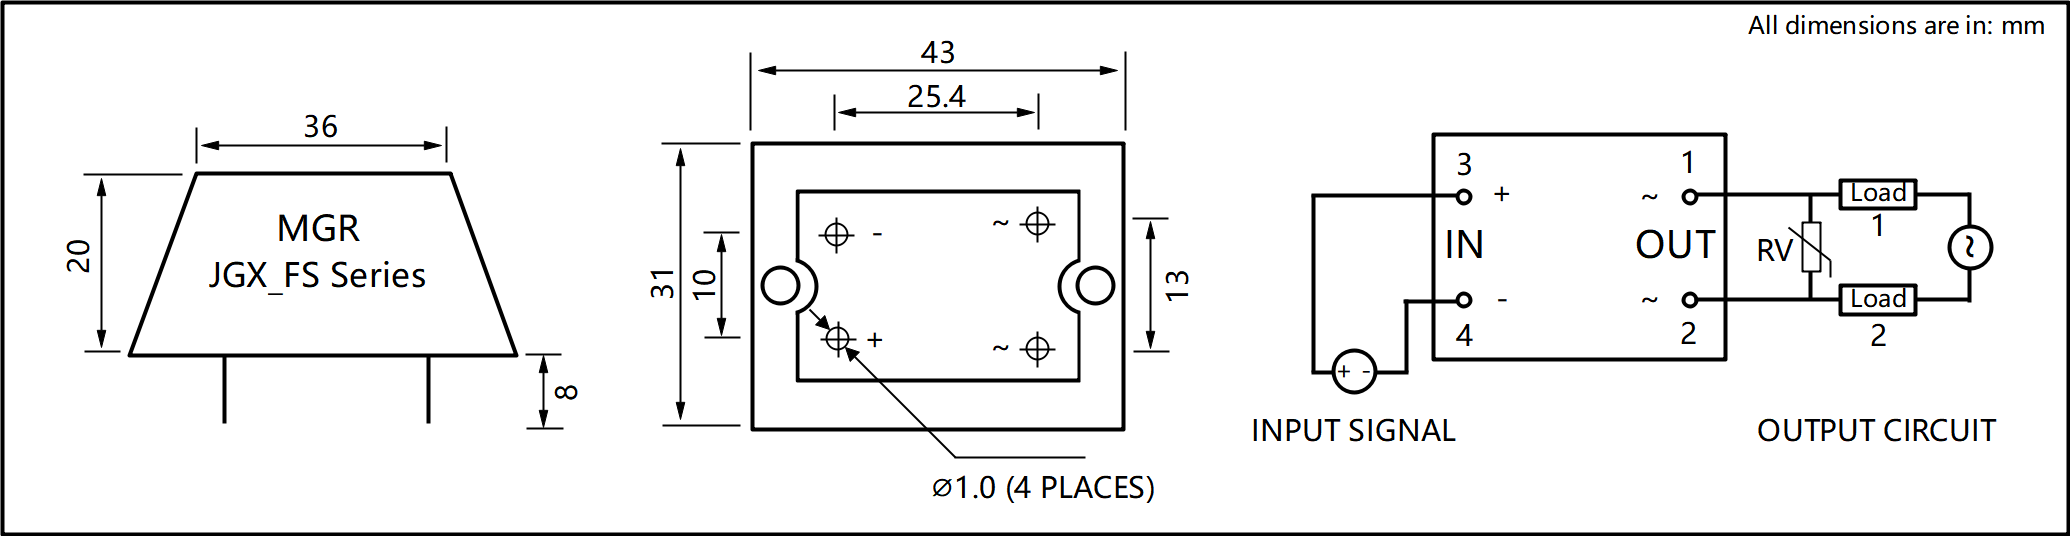 JGX_F Series Cast Aluminum-zinc Alloy Housing PCB Mount Solid State Relay Circuit Wring Diagram